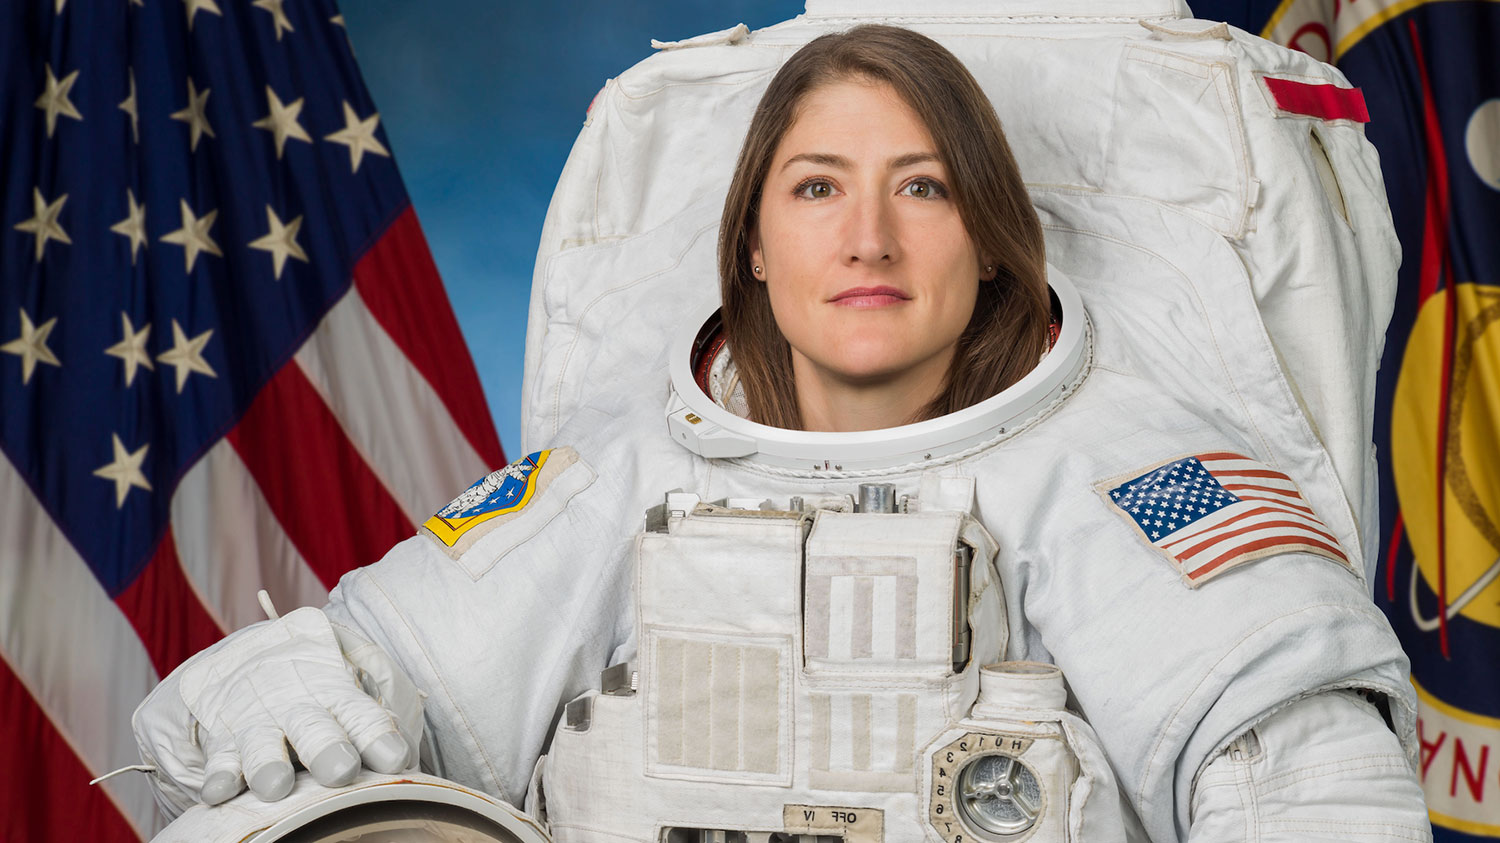 NC State Alumna和Astronaut Christina Koch